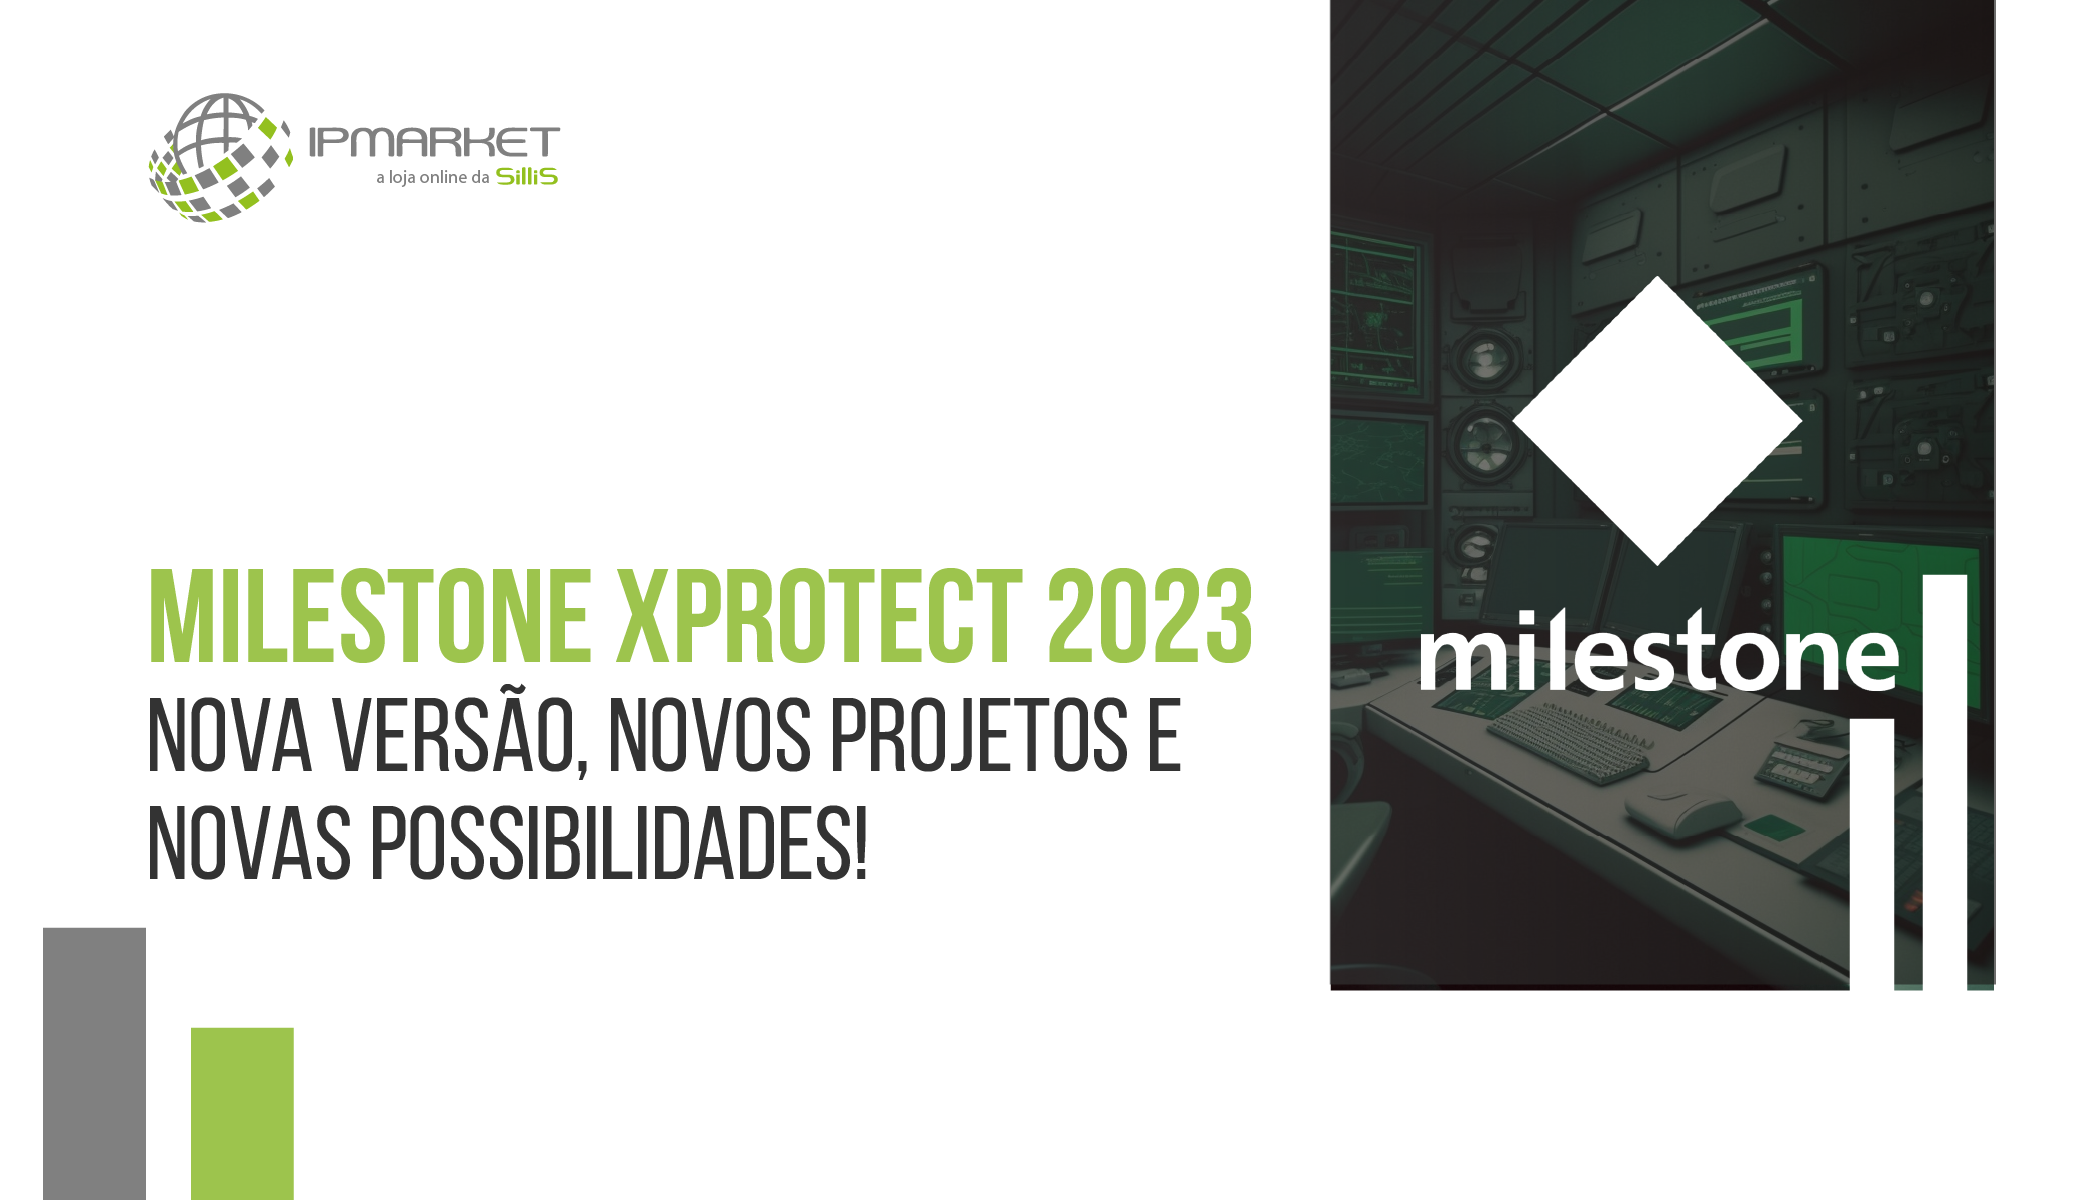 Milestone XProtect